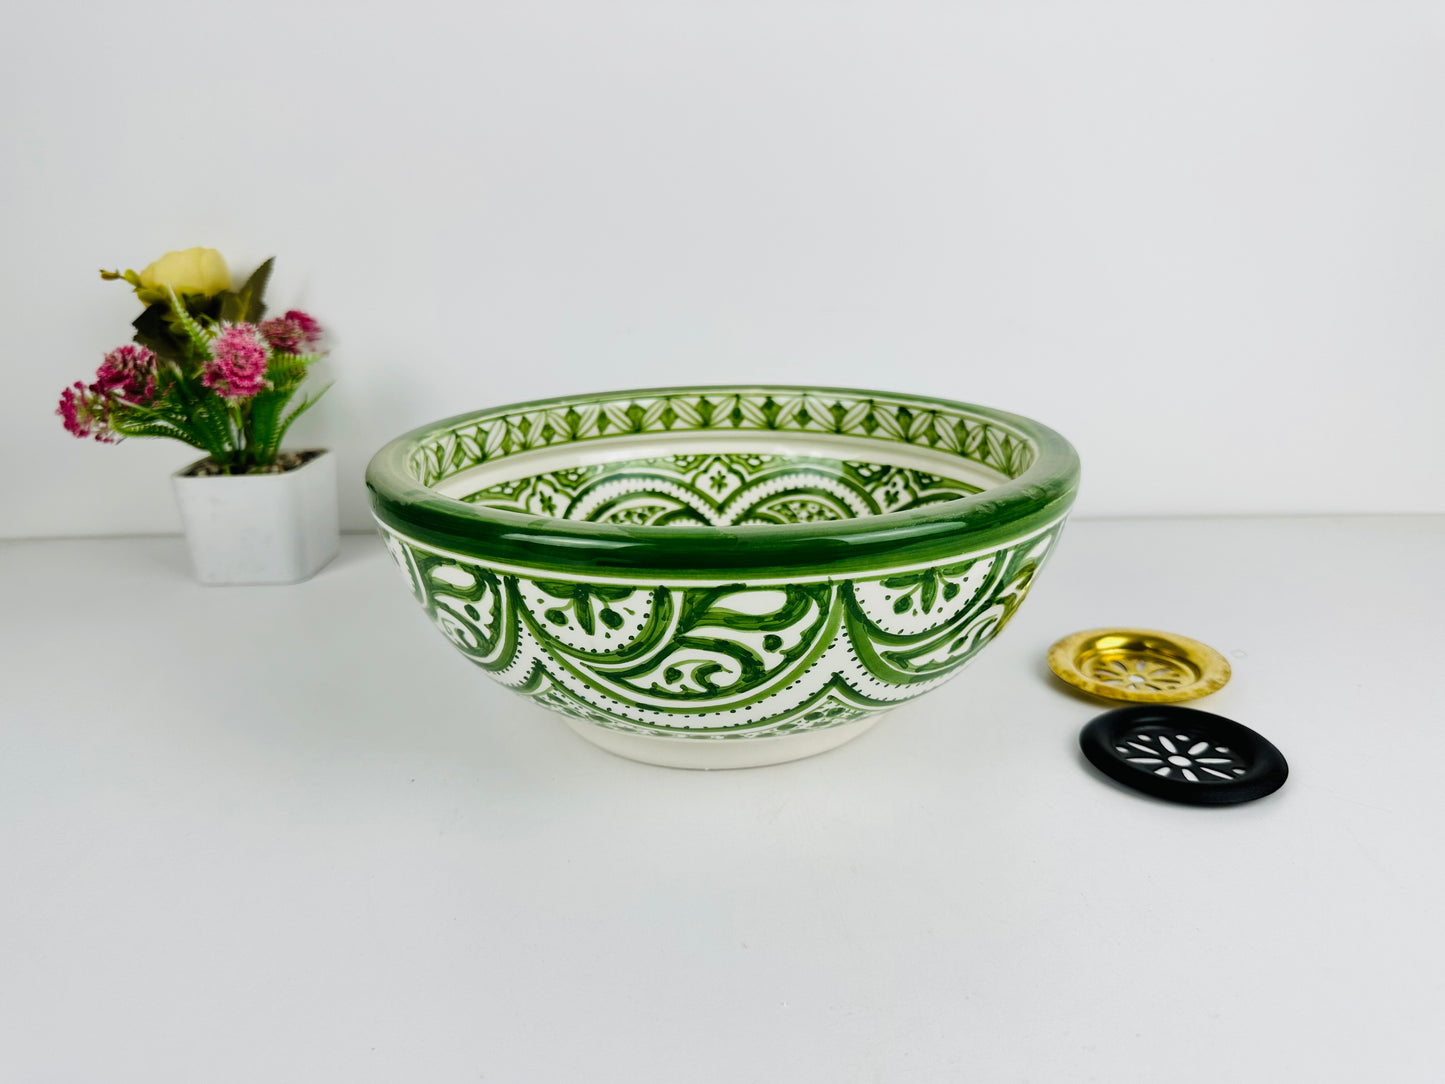 Basil Breeze: Handcrafted Ceramic Sink in Basil Green Hue